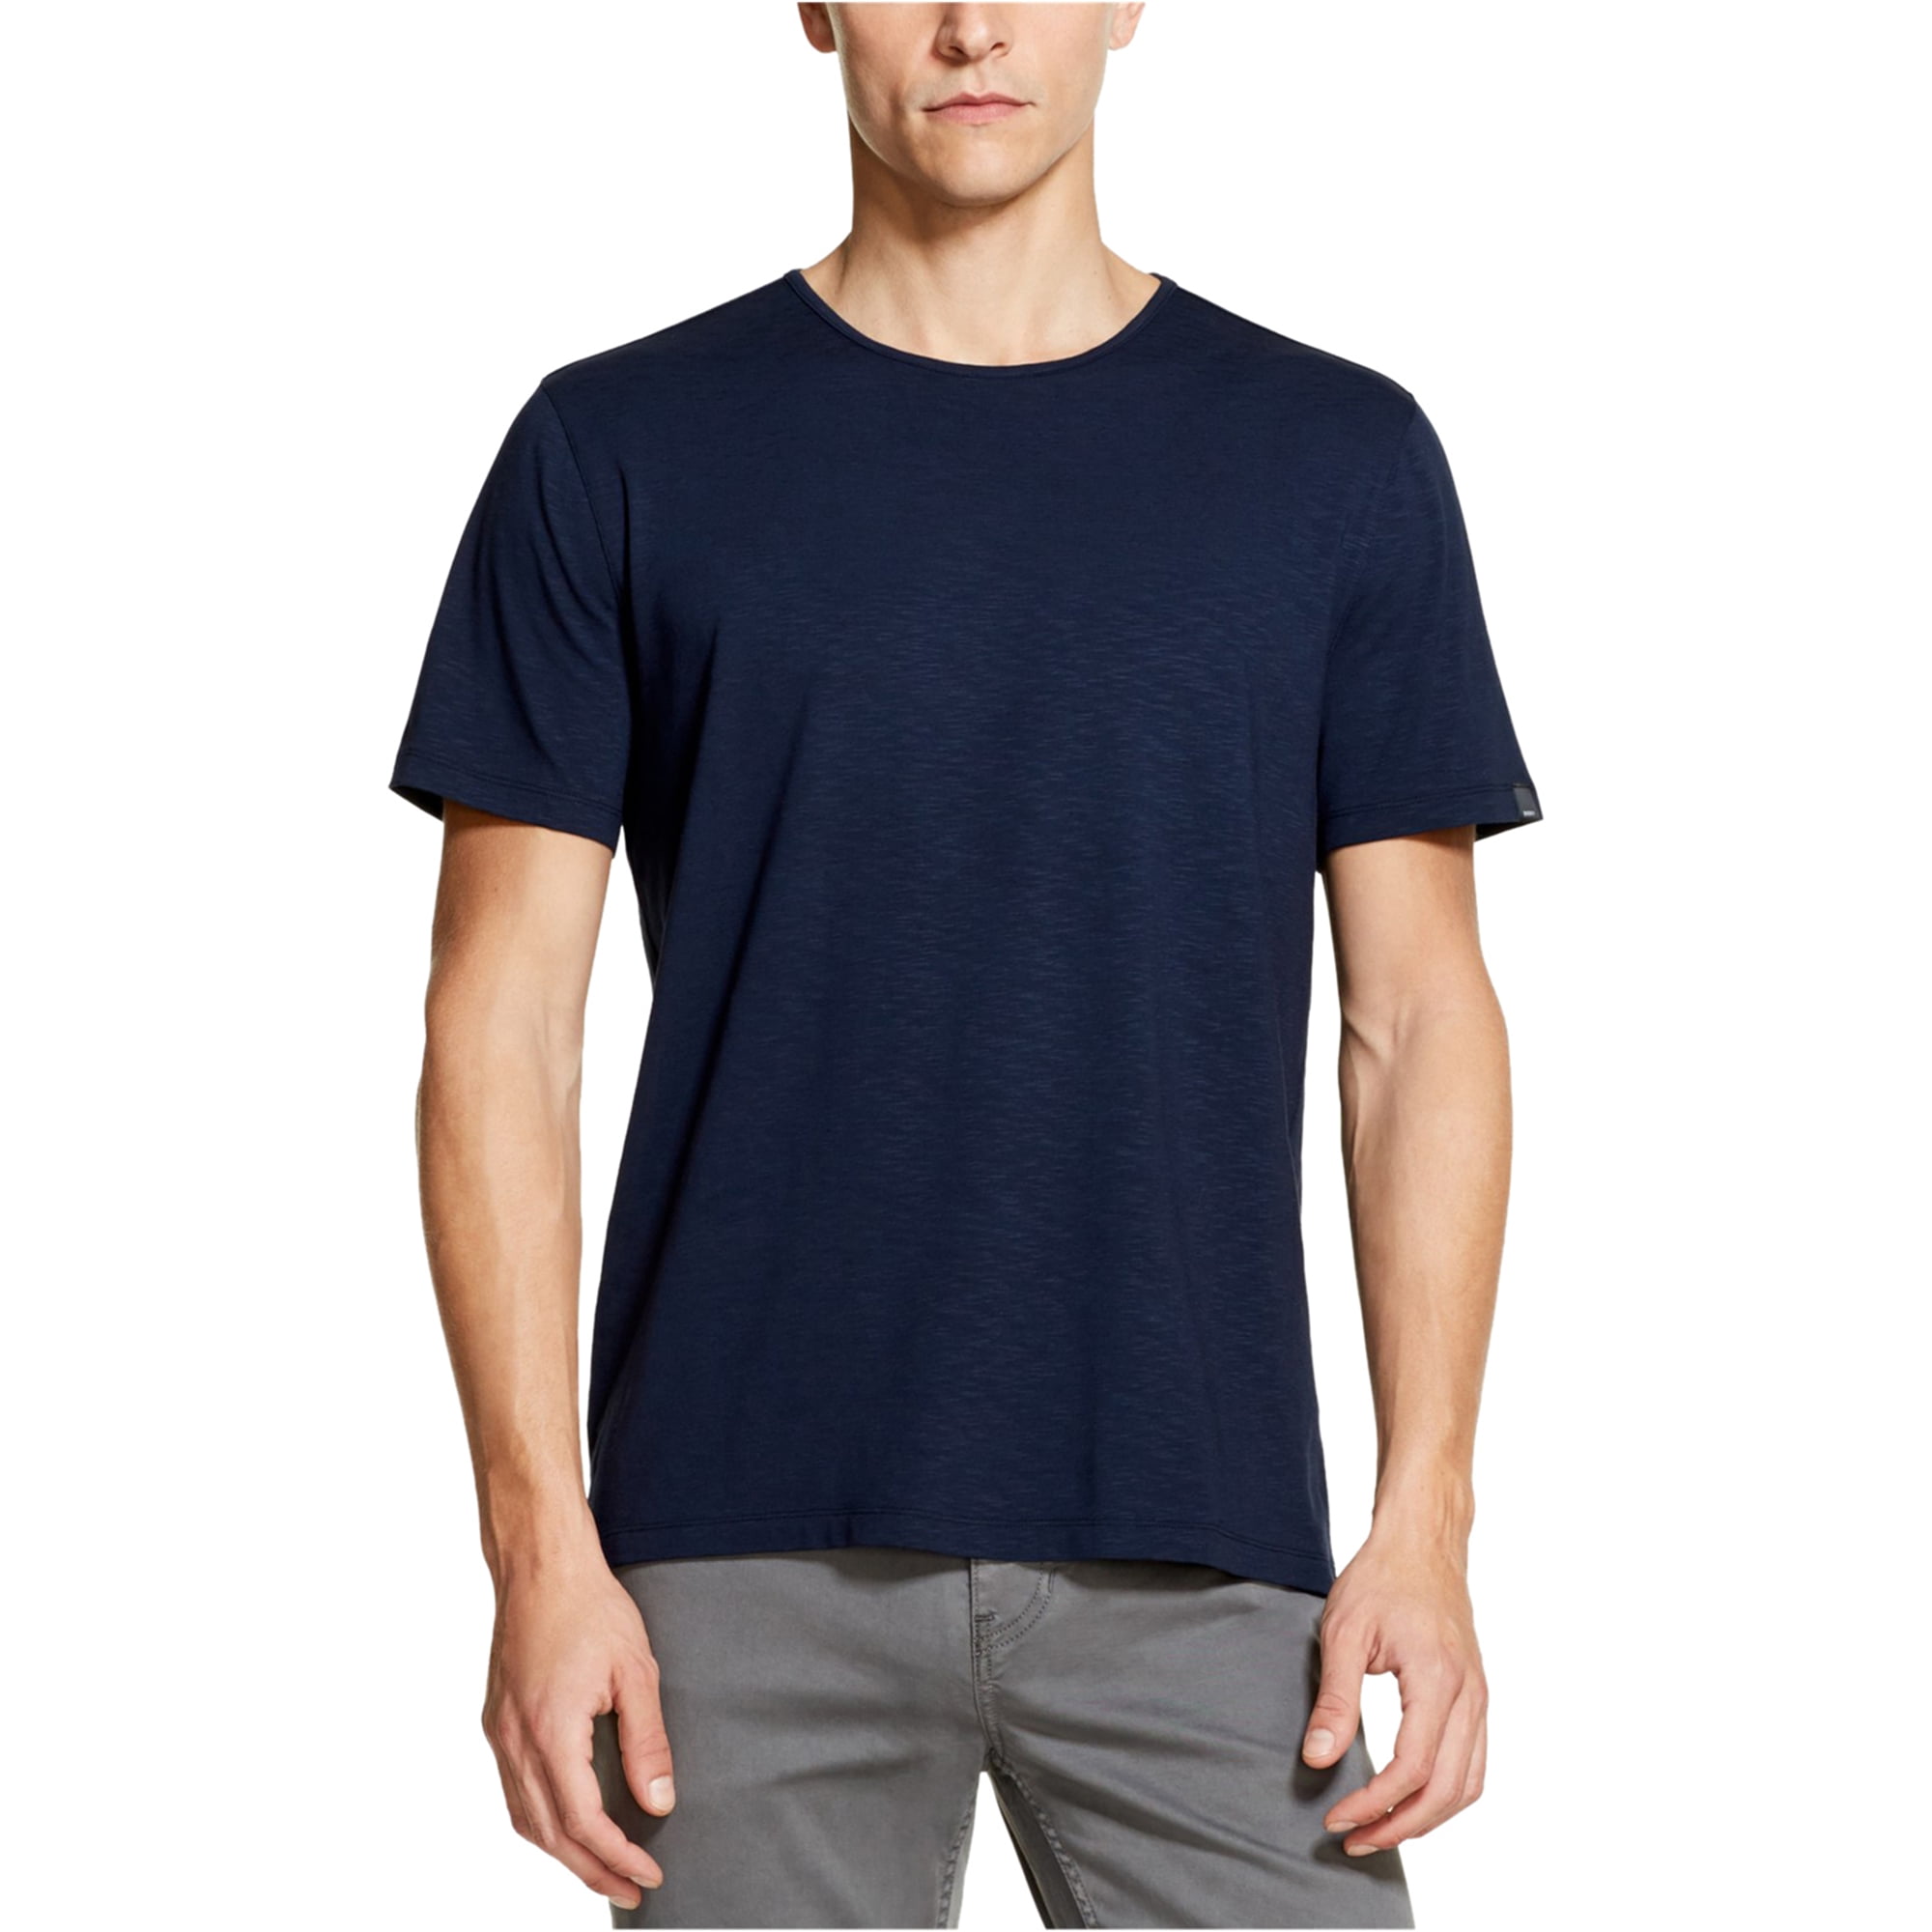 DKNY - Dkny Mens Solid Tee Basic T-Shirt - Walmart.com - Walmart.com